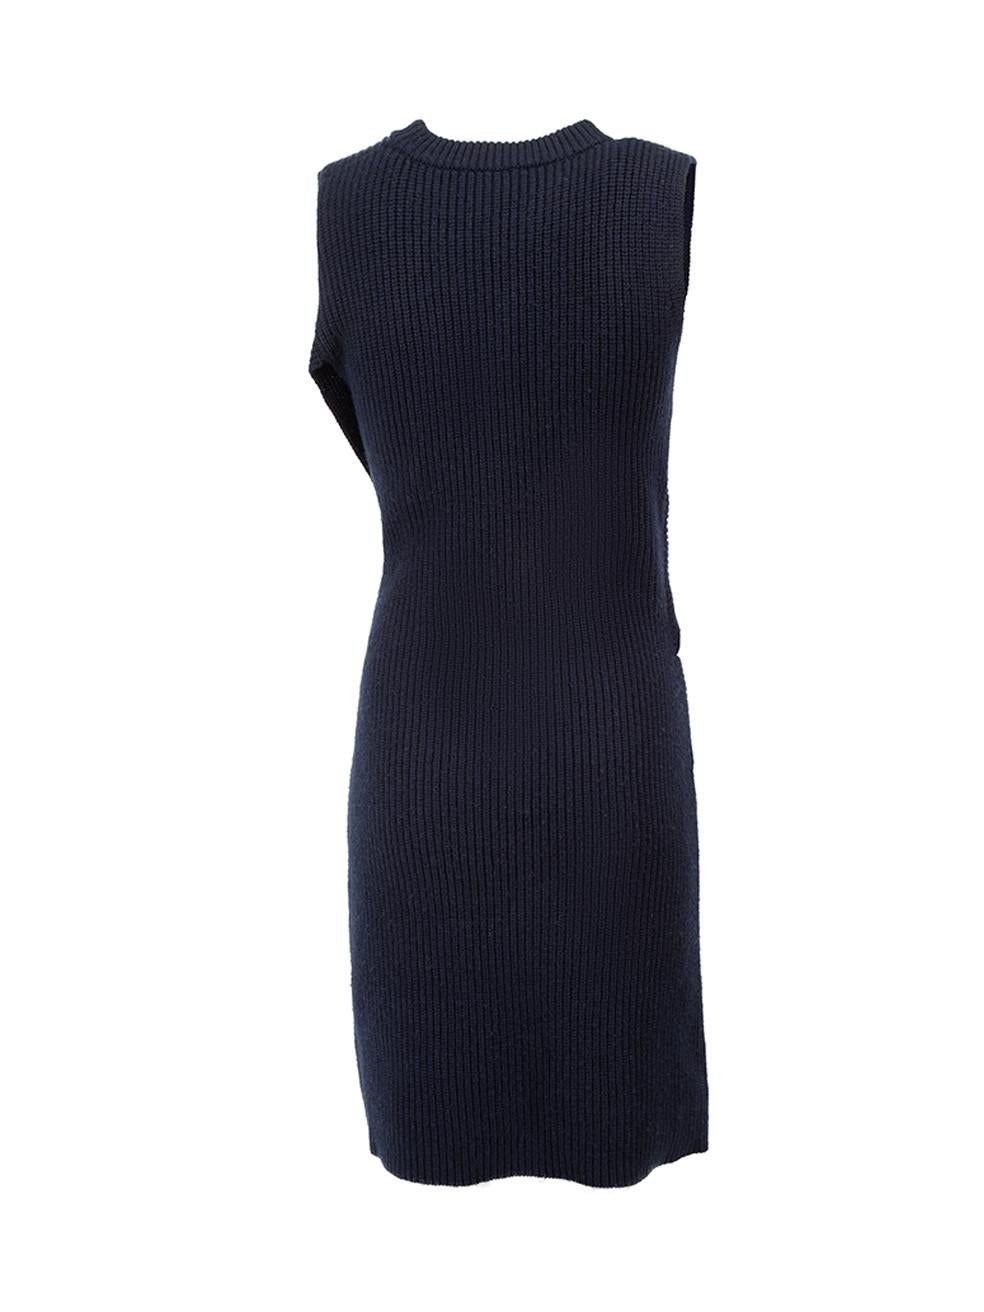 3.1 Phillip Lim Women's Navy Wool Twist Accent Mini Knit Dress In Good Condition In London, GB